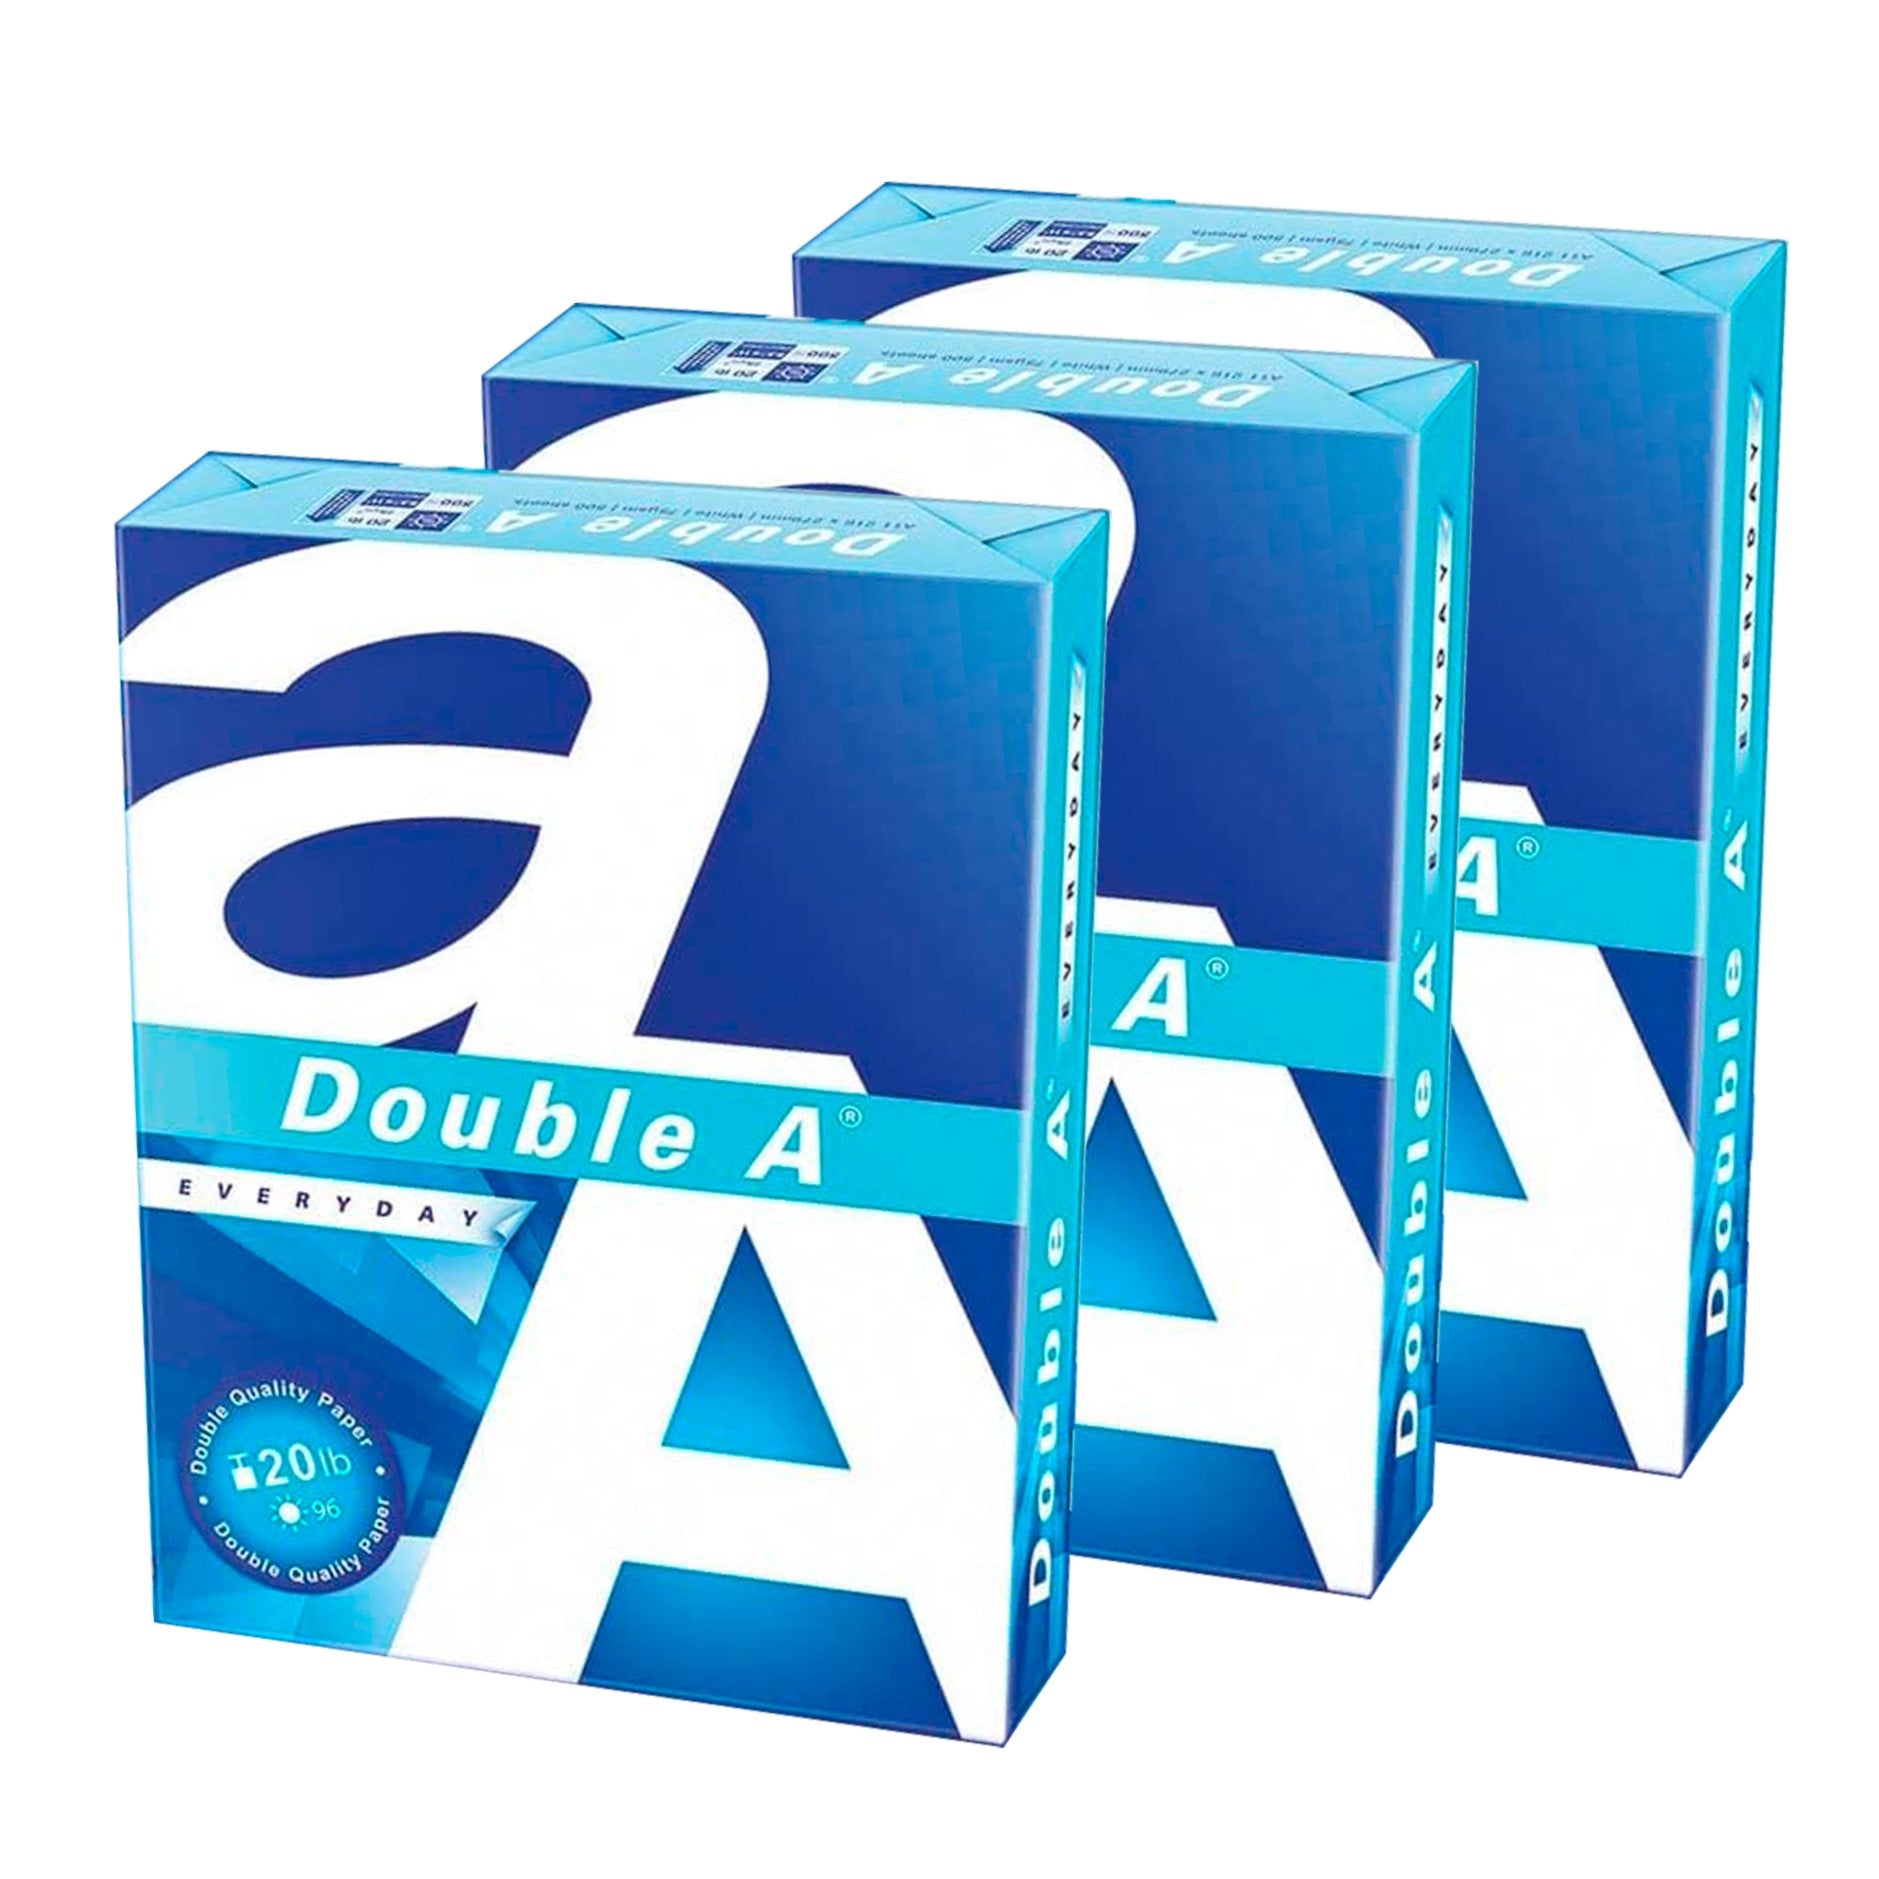 DOUBLE A (96) 8.5 X 11 White Copy Paper 200,000 Sheets (40 Cases